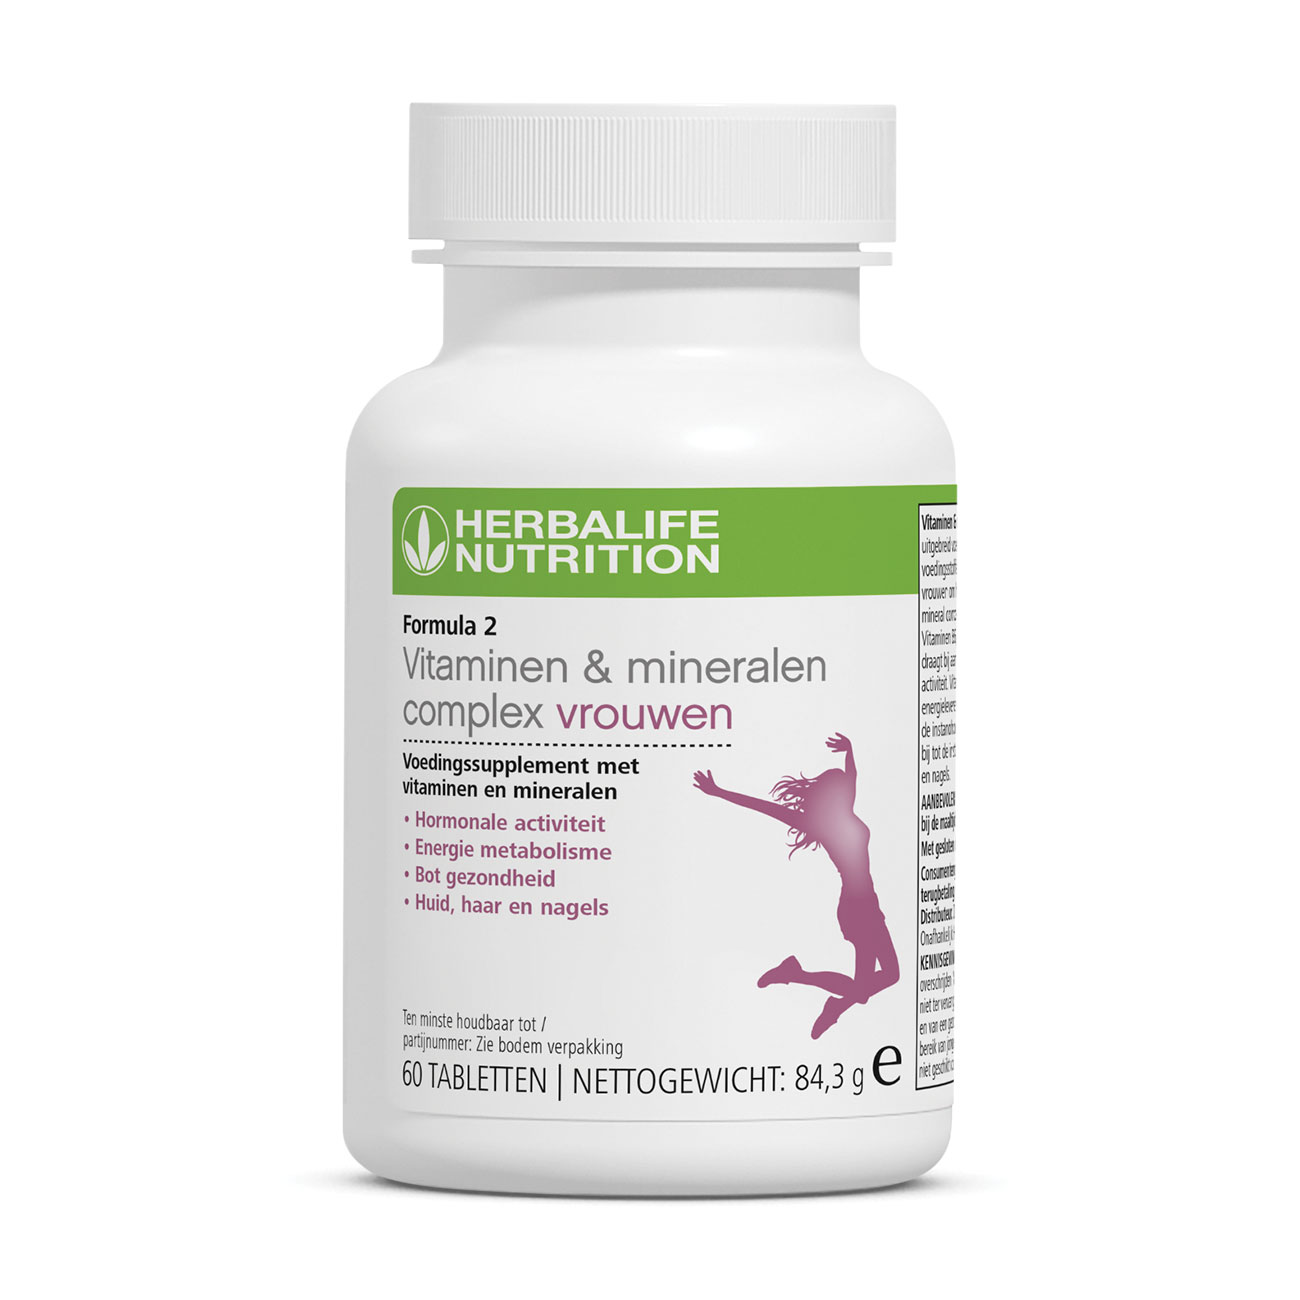 Formula 2 Vitaminen & mineralencomplex vrouwen multivitaminen supplement product shot